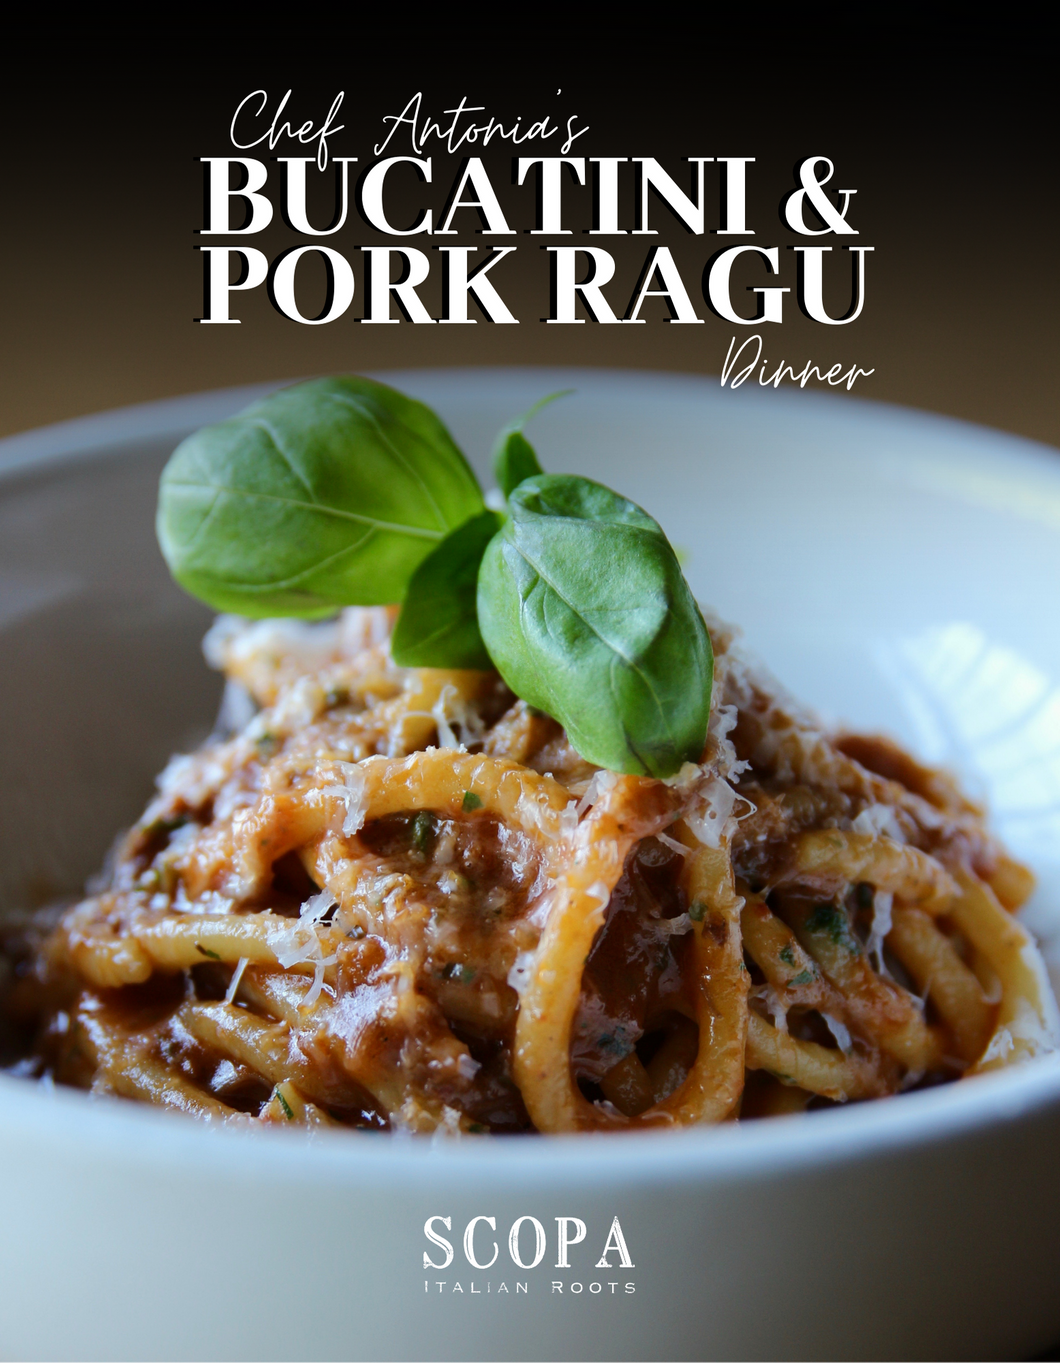 Bucatini & Pork Ragu Family Pasta Dinner